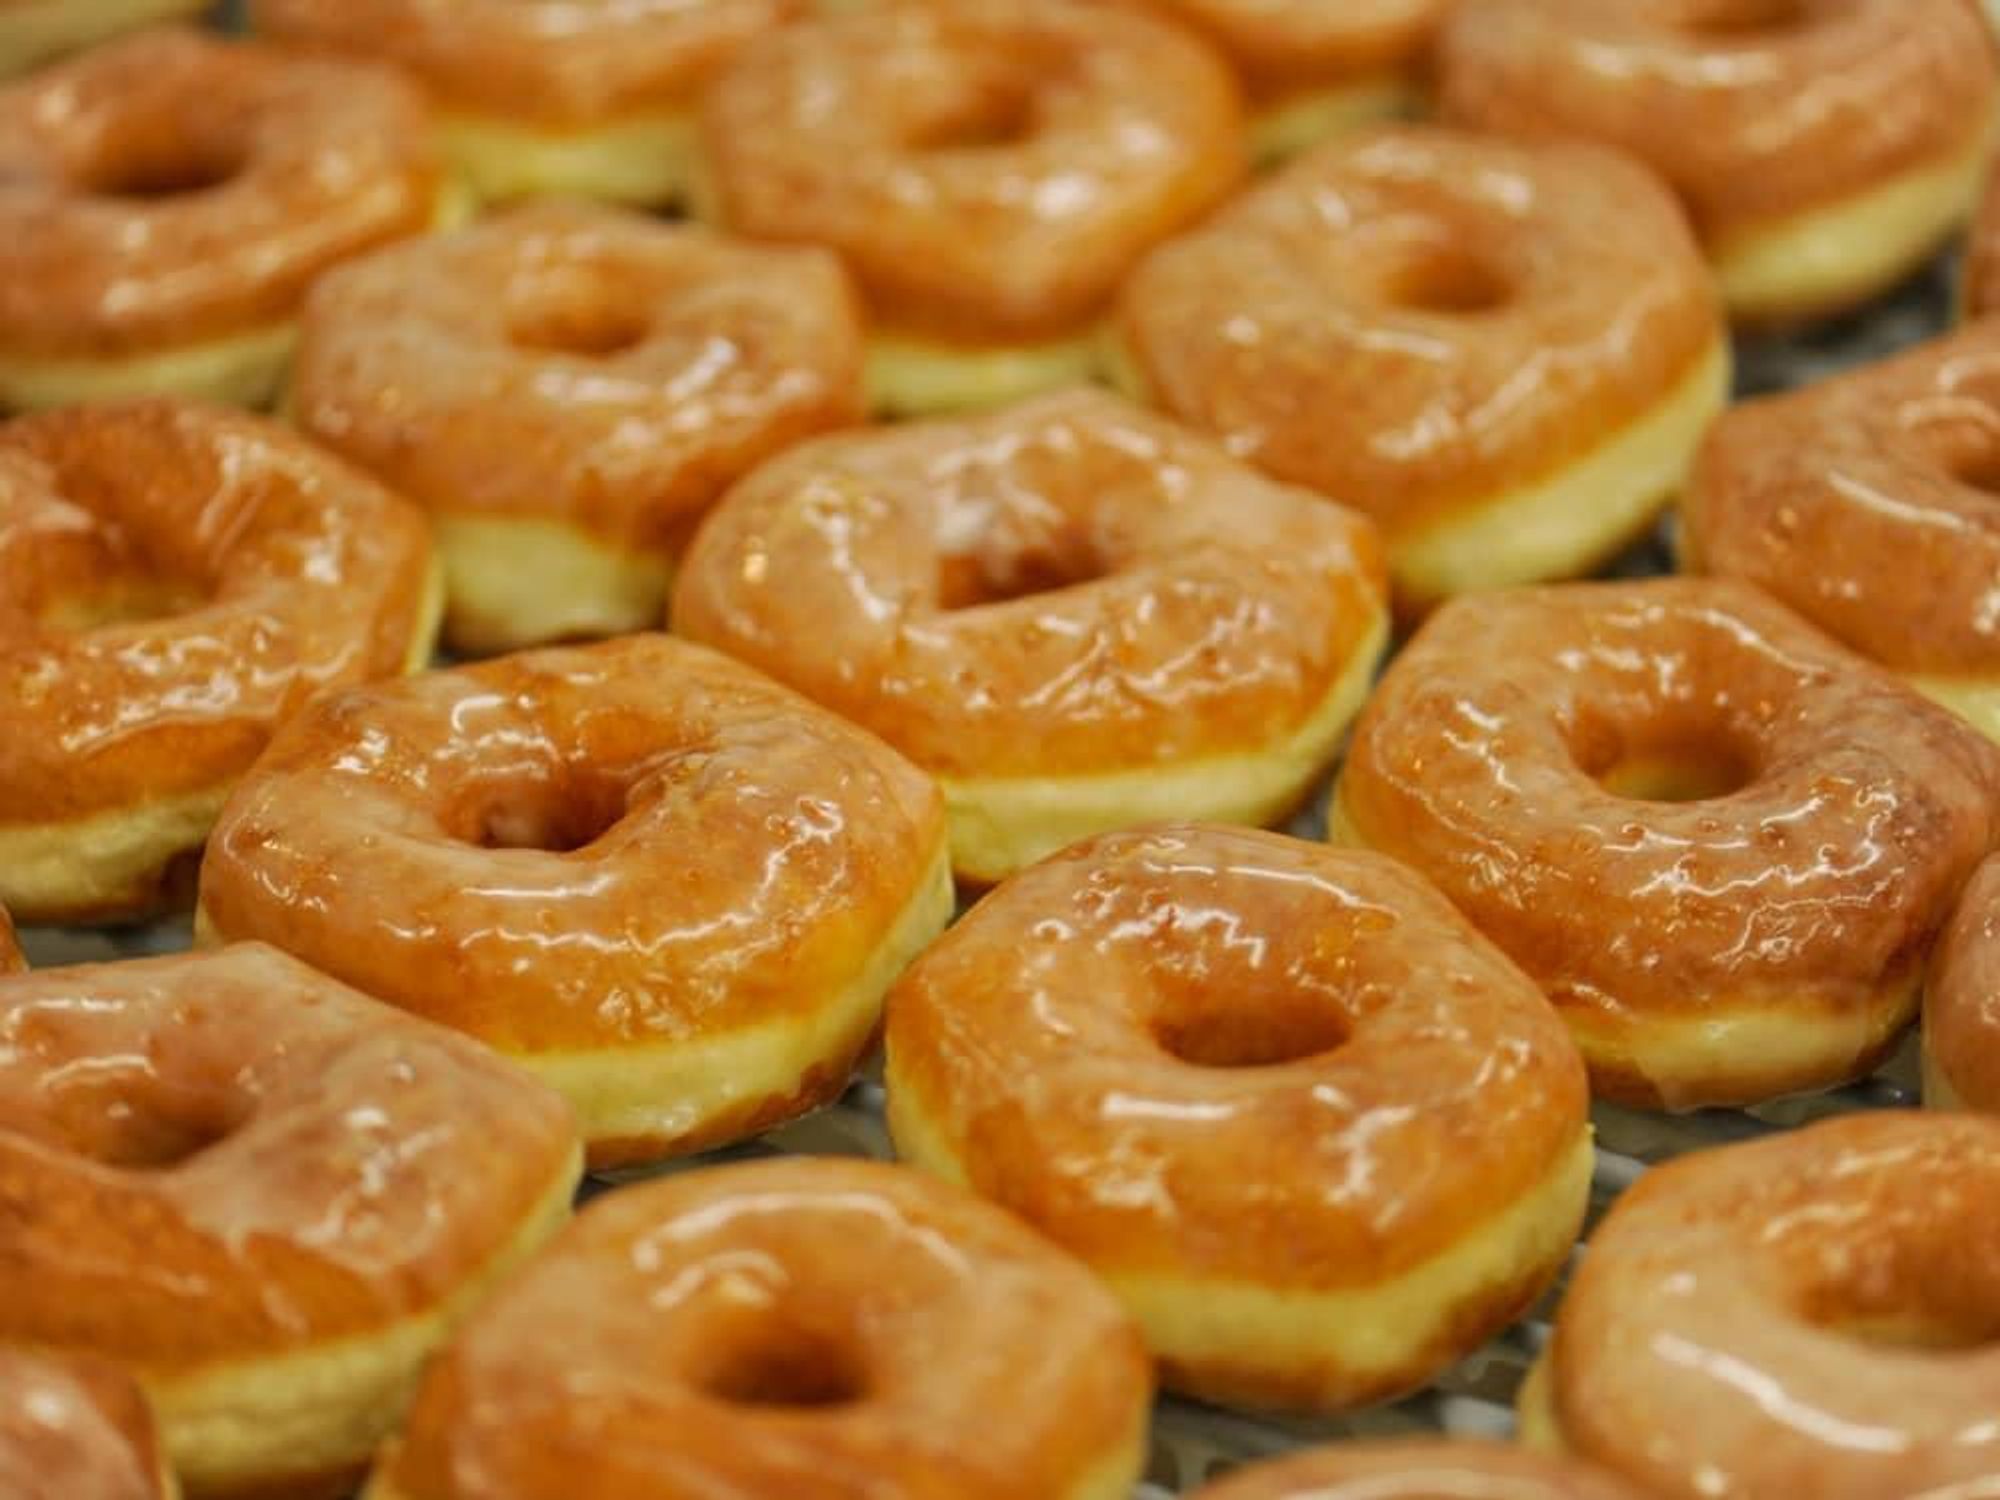 News_Shipley's Do-Nuts_doughnuts